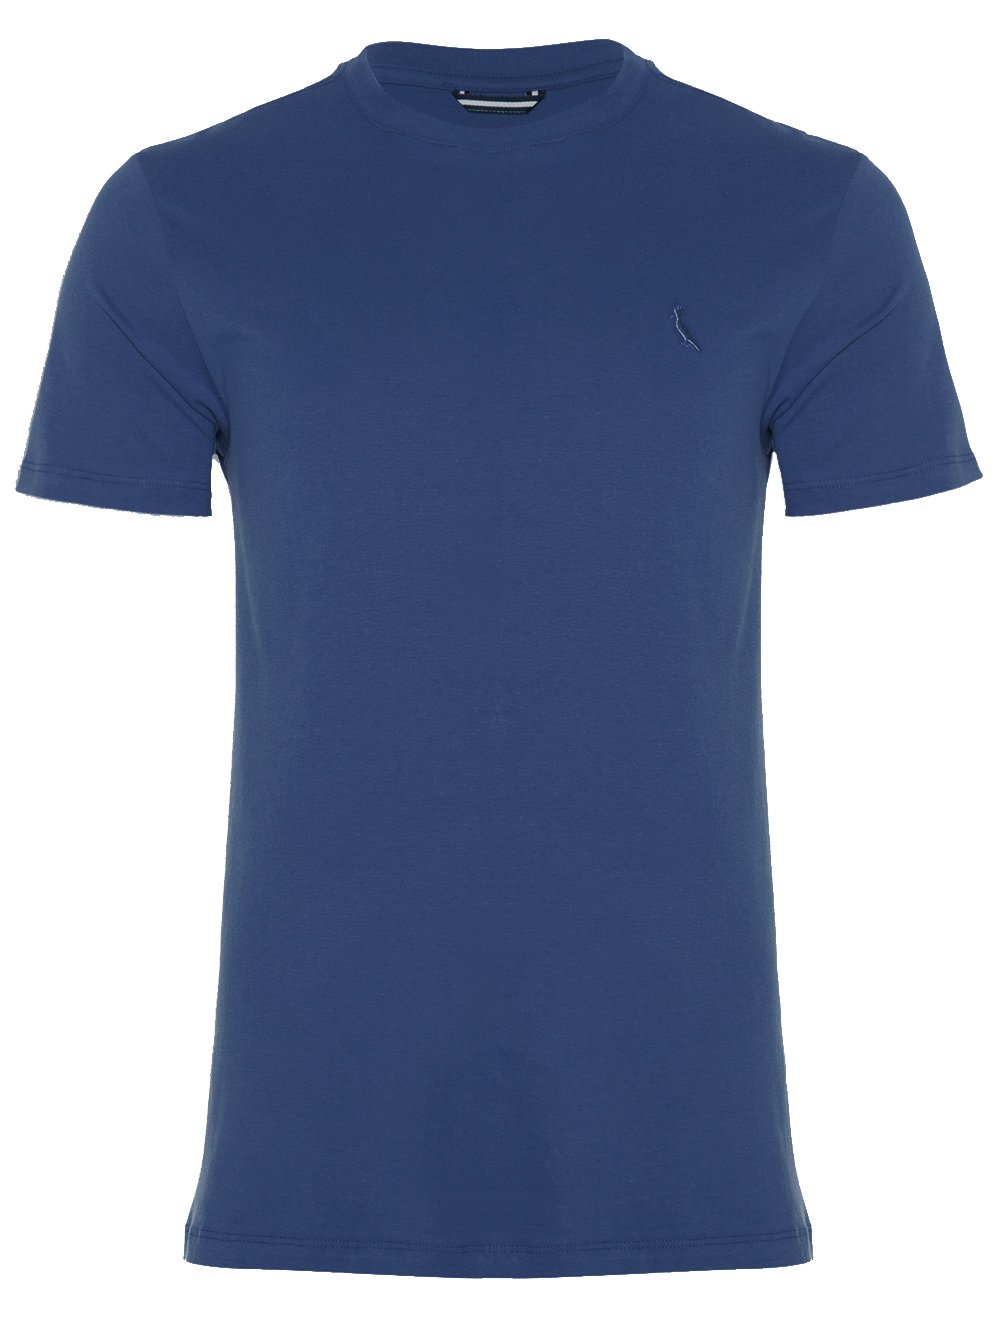 Camiseta Reserva Masculina Regular Pima Cotton Azul Royal